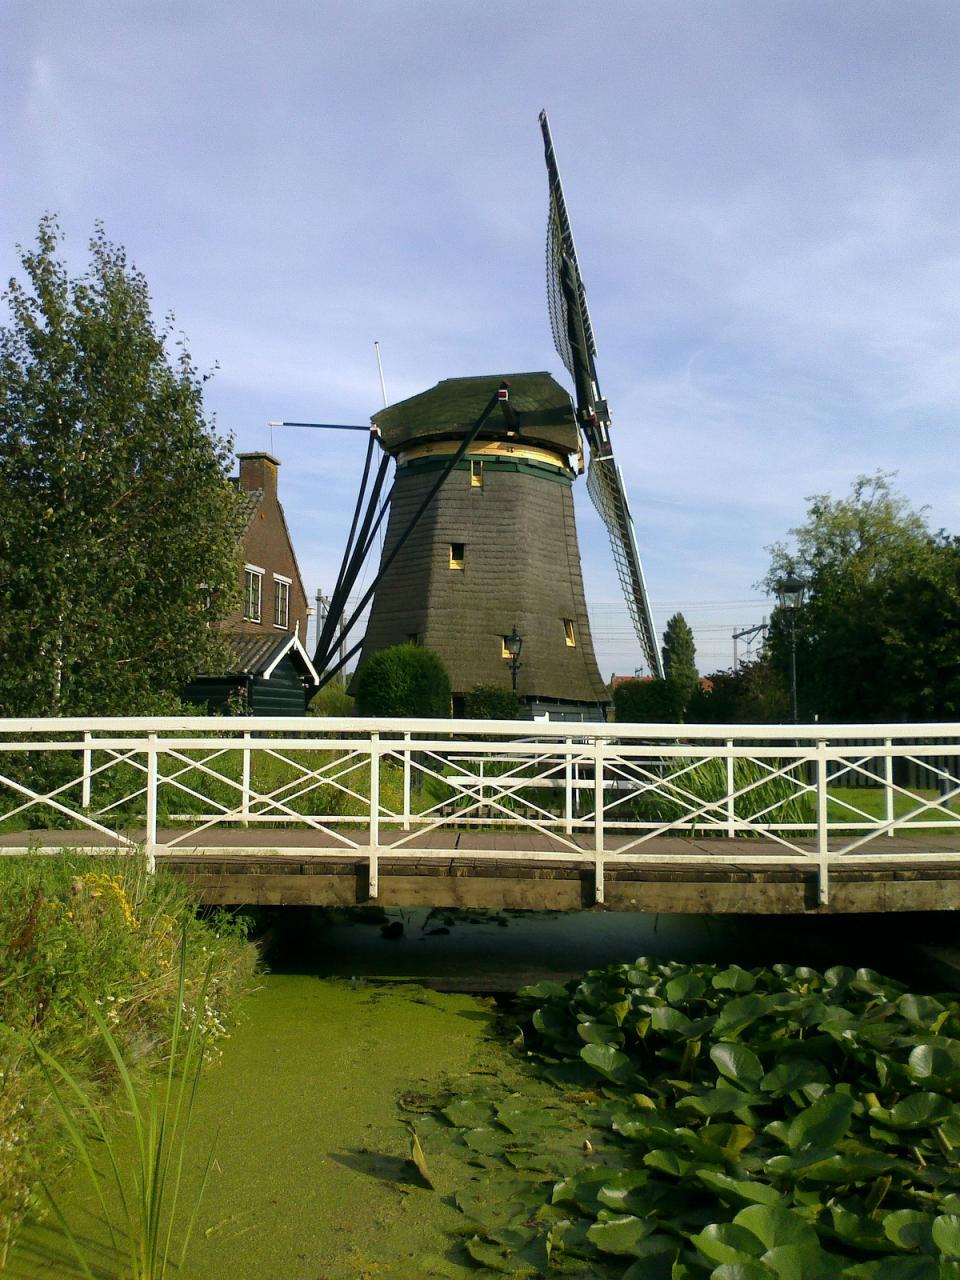 File:Nieuwe Veenmolen windmill, The Hague, Holland - cc 04.jpg ...